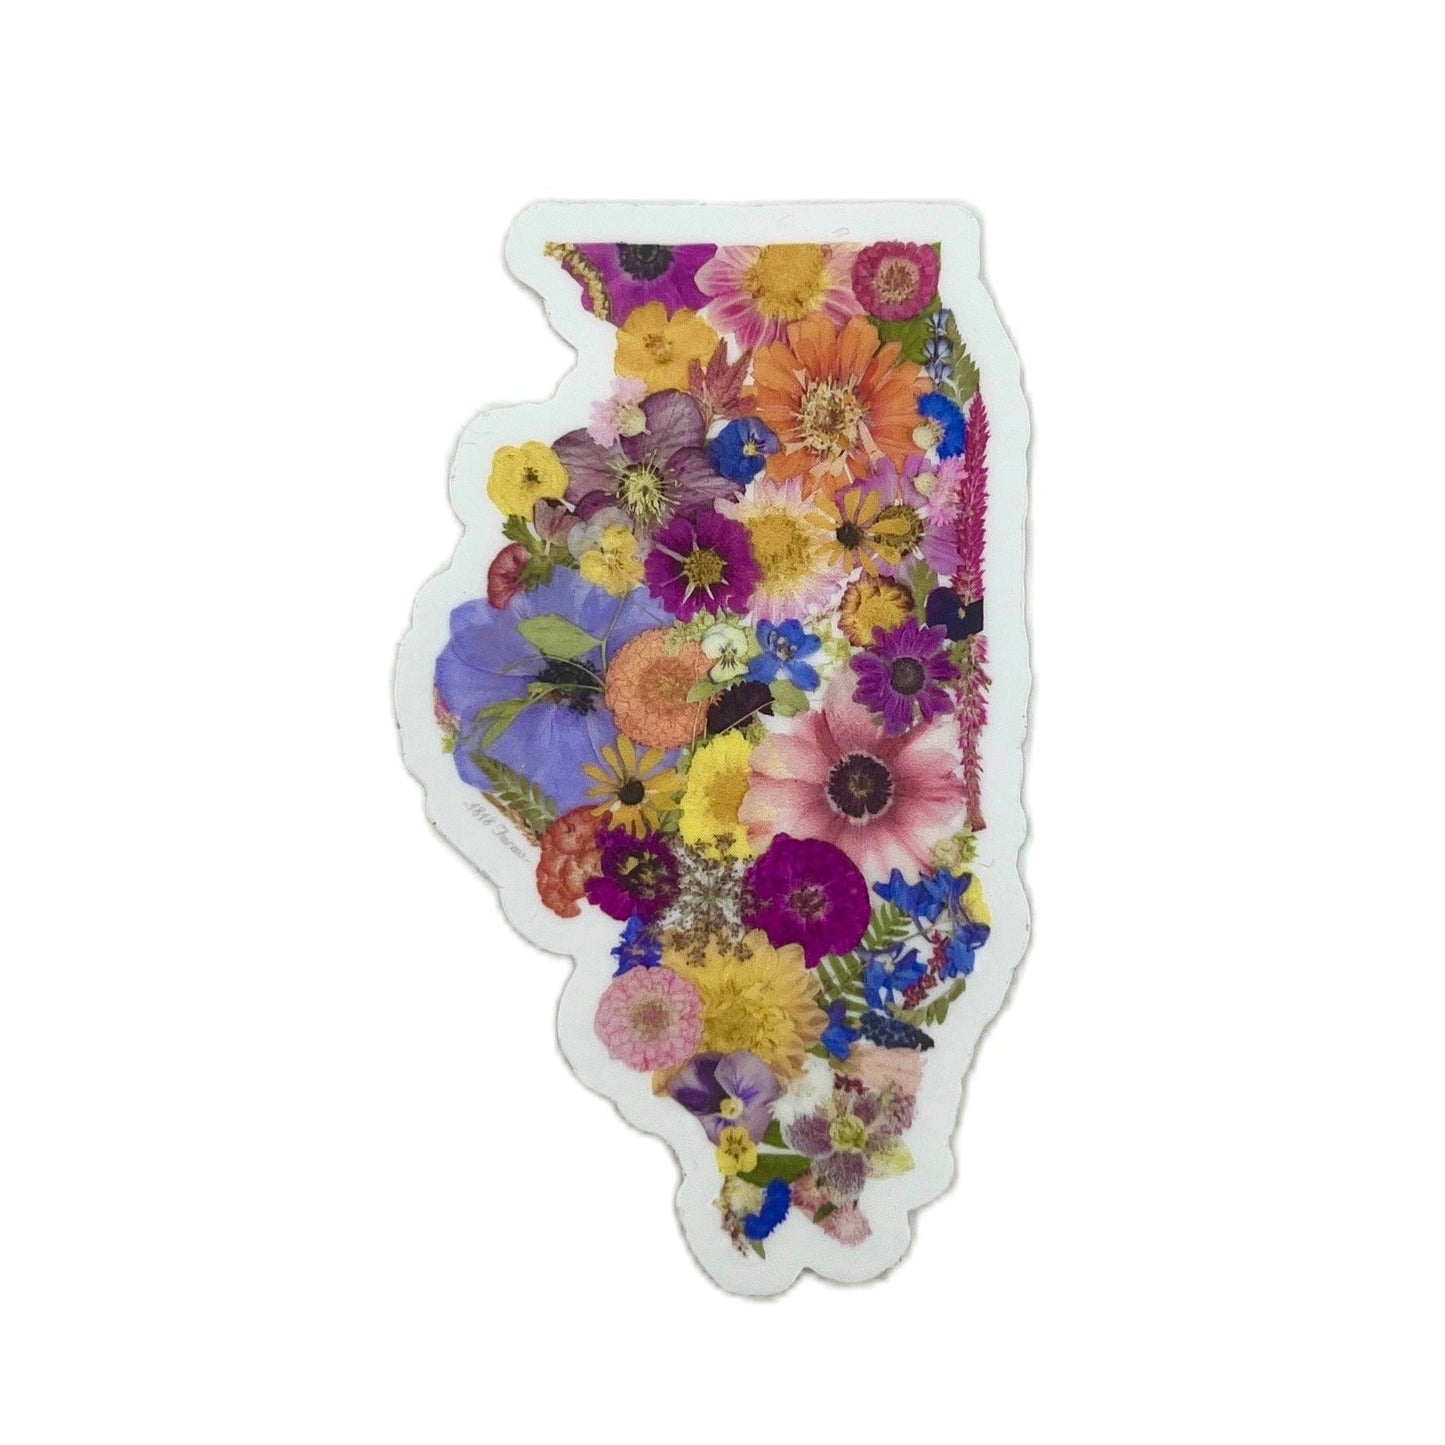 State Themed Vinyl Sticker  - "Where I Bloom" Collection Vinyl Sticker 1818 Farms Illinois  